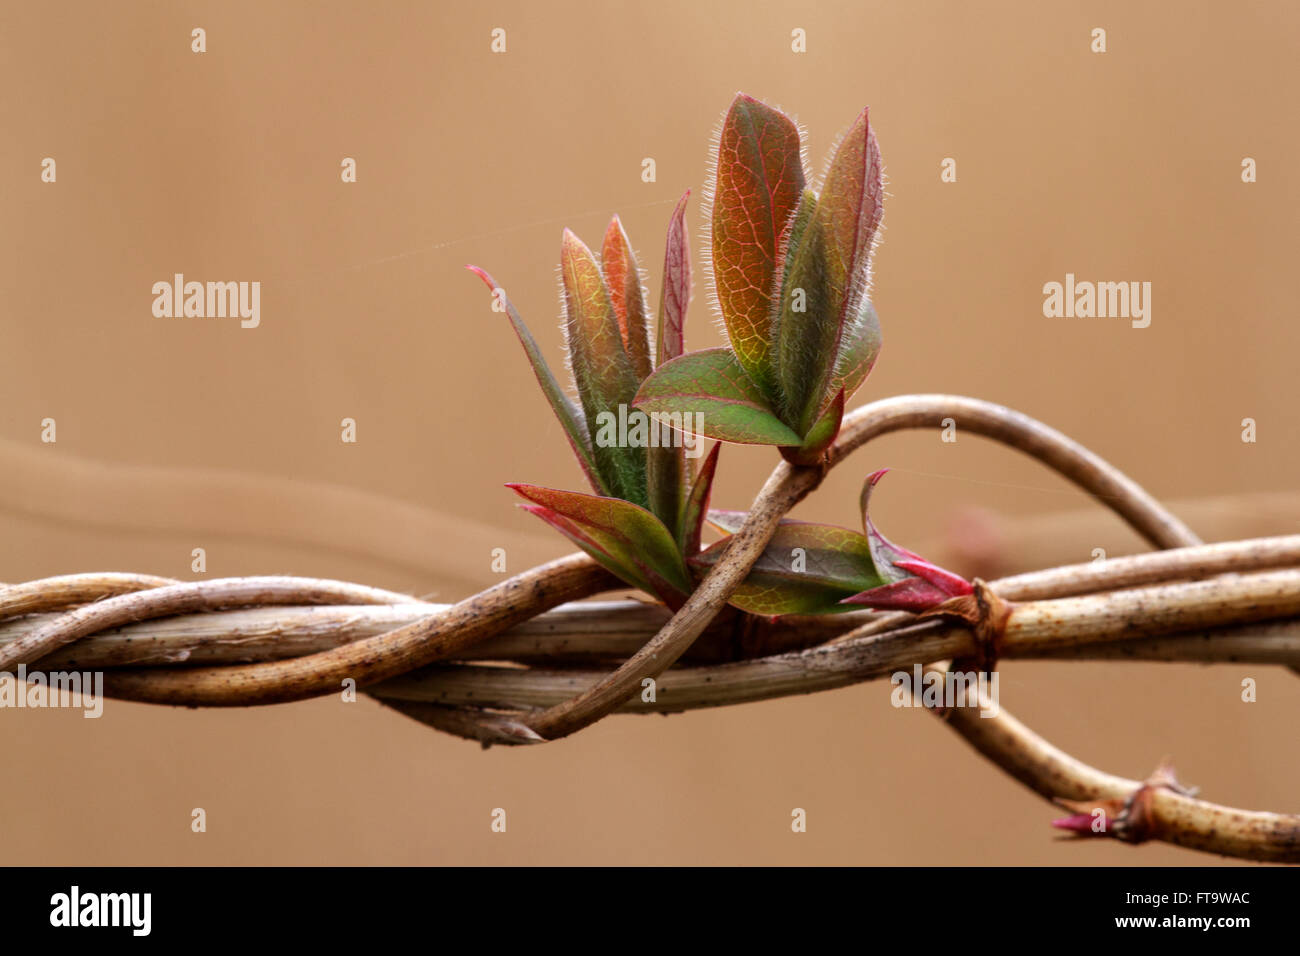 Honeysuckle Lonicera periclymenum spring leaves & twisted stems Stock Photo